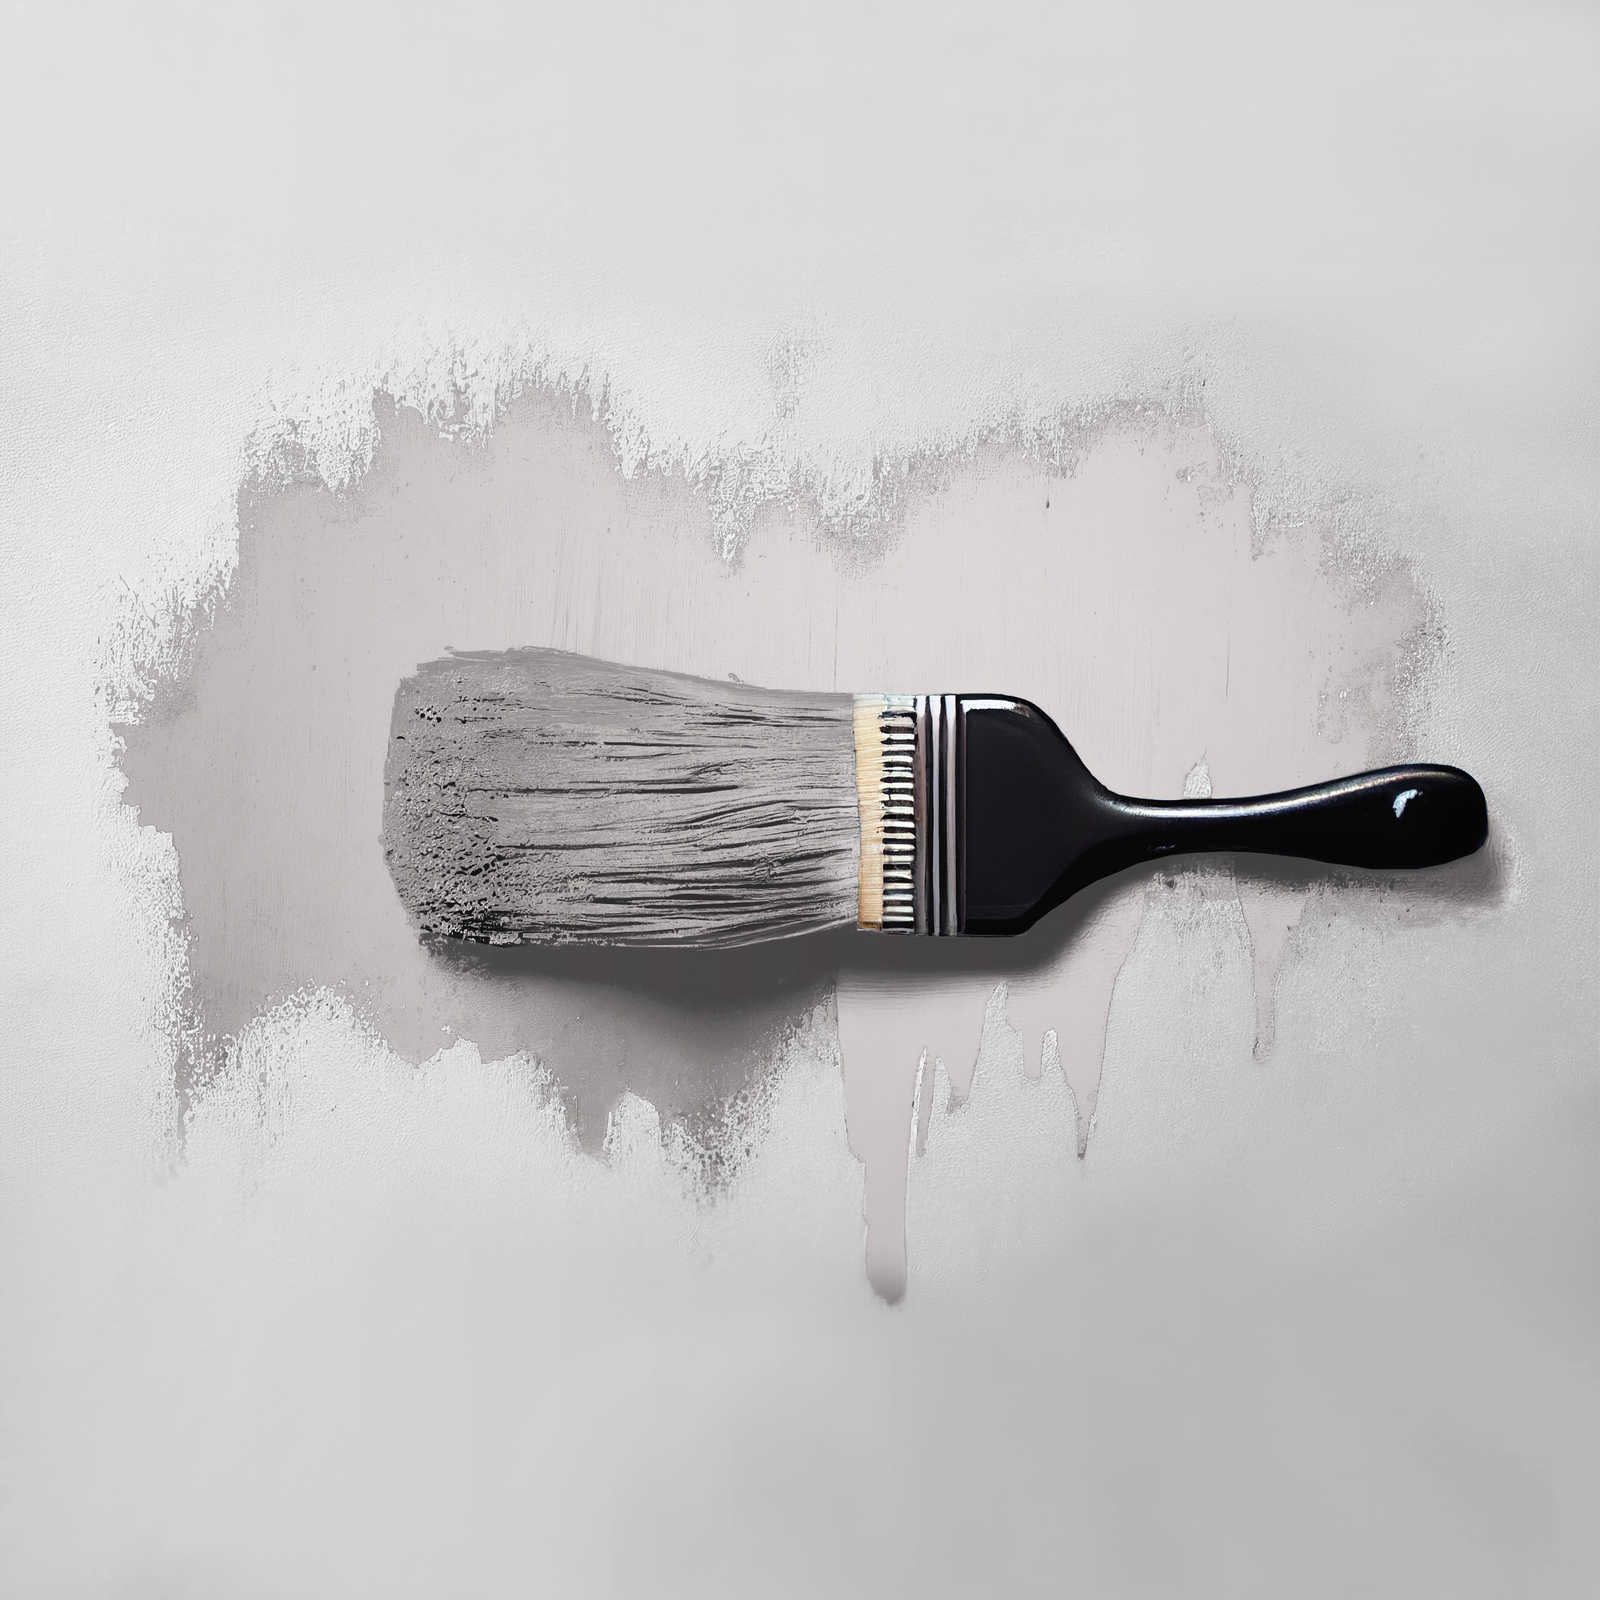             Pittura murale TCK2001 »Salty Shrimp« in grigio chiaro caldo – 2,5 litri
        